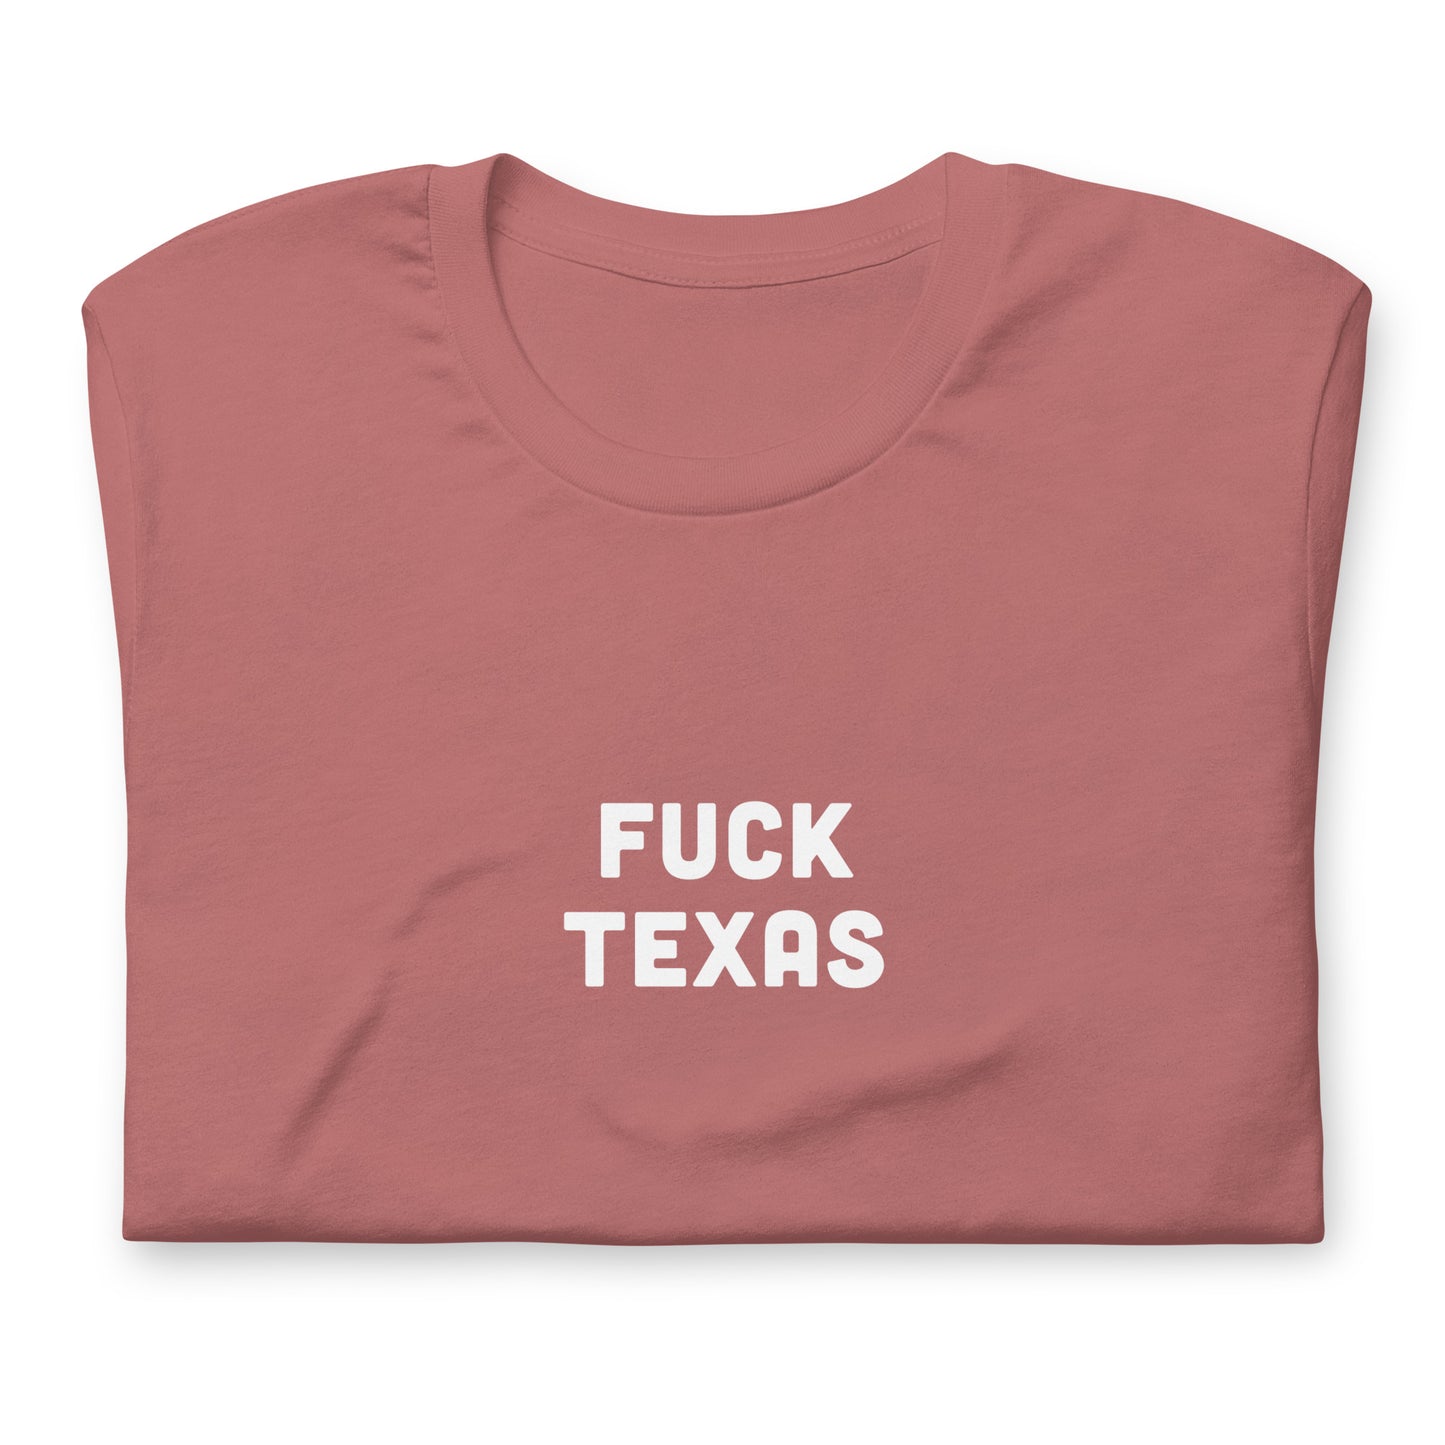 Fuck Texas T-Shirt Size L Color Forest